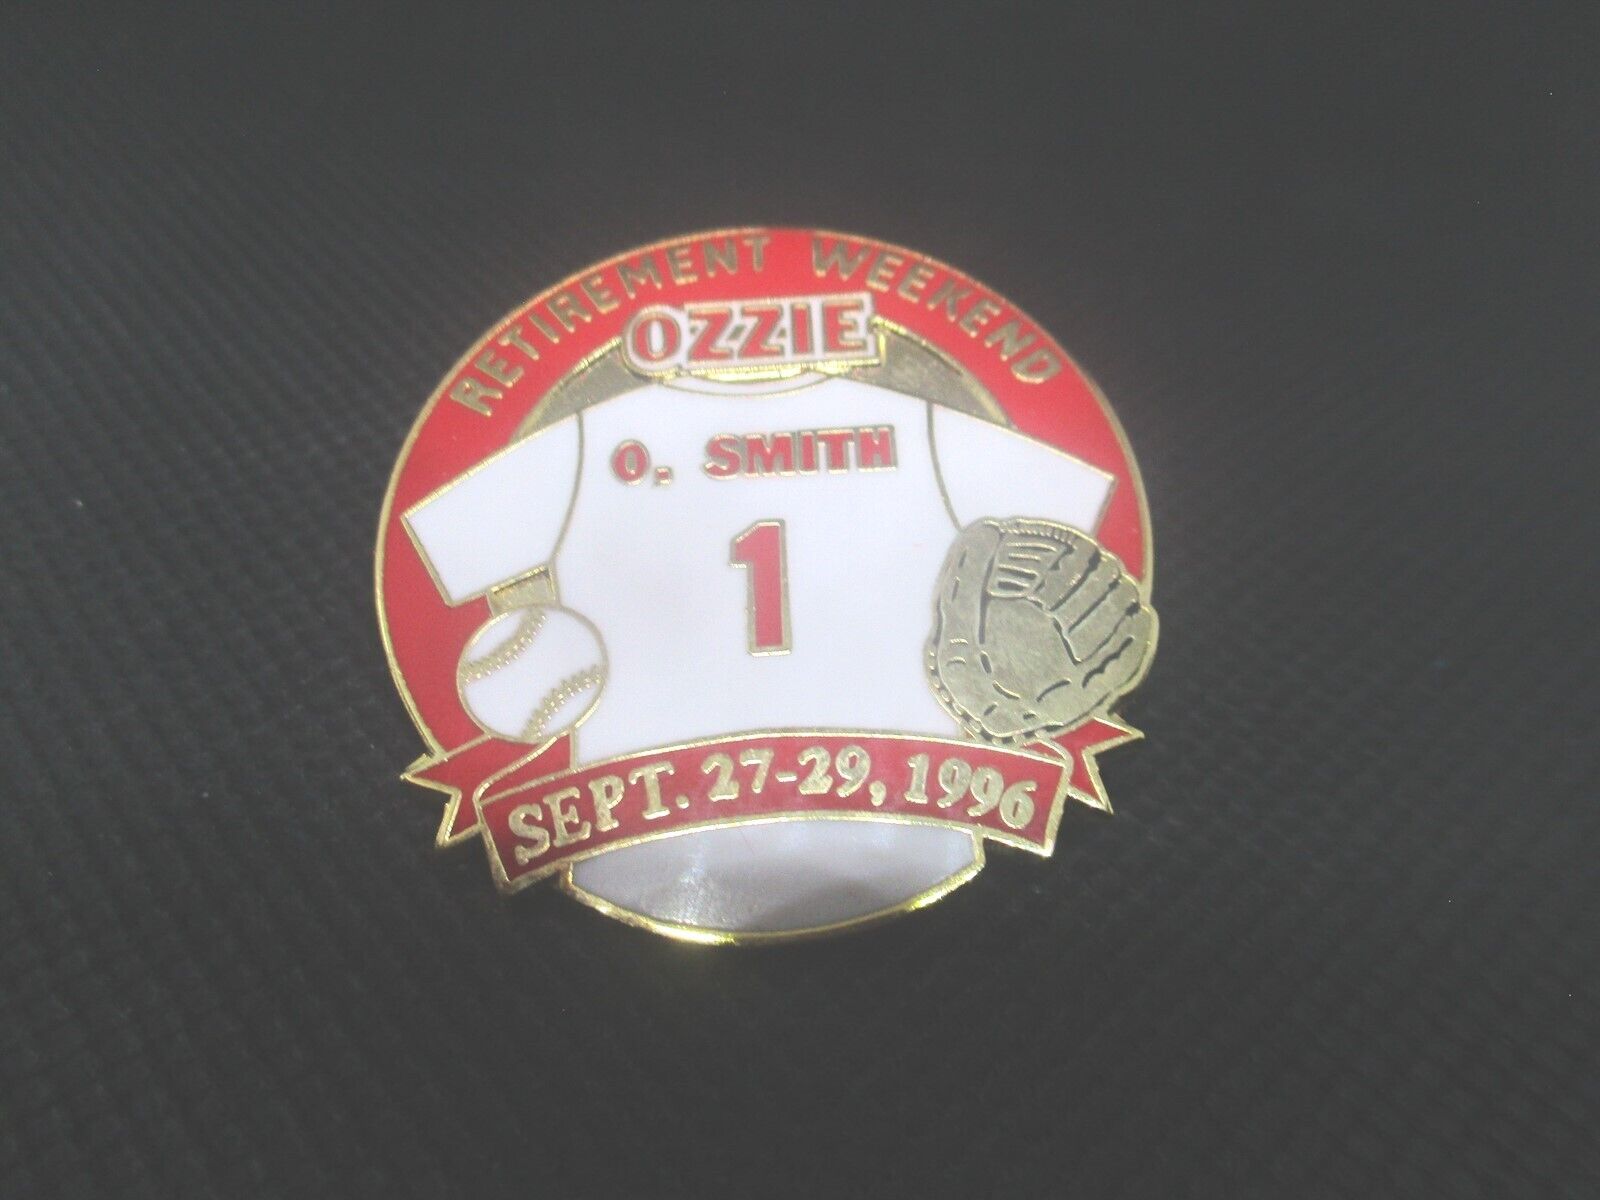 Vintage 1996 St. Louis Cardinals Ozzie Smith Retirement Weekend Collectors Pin